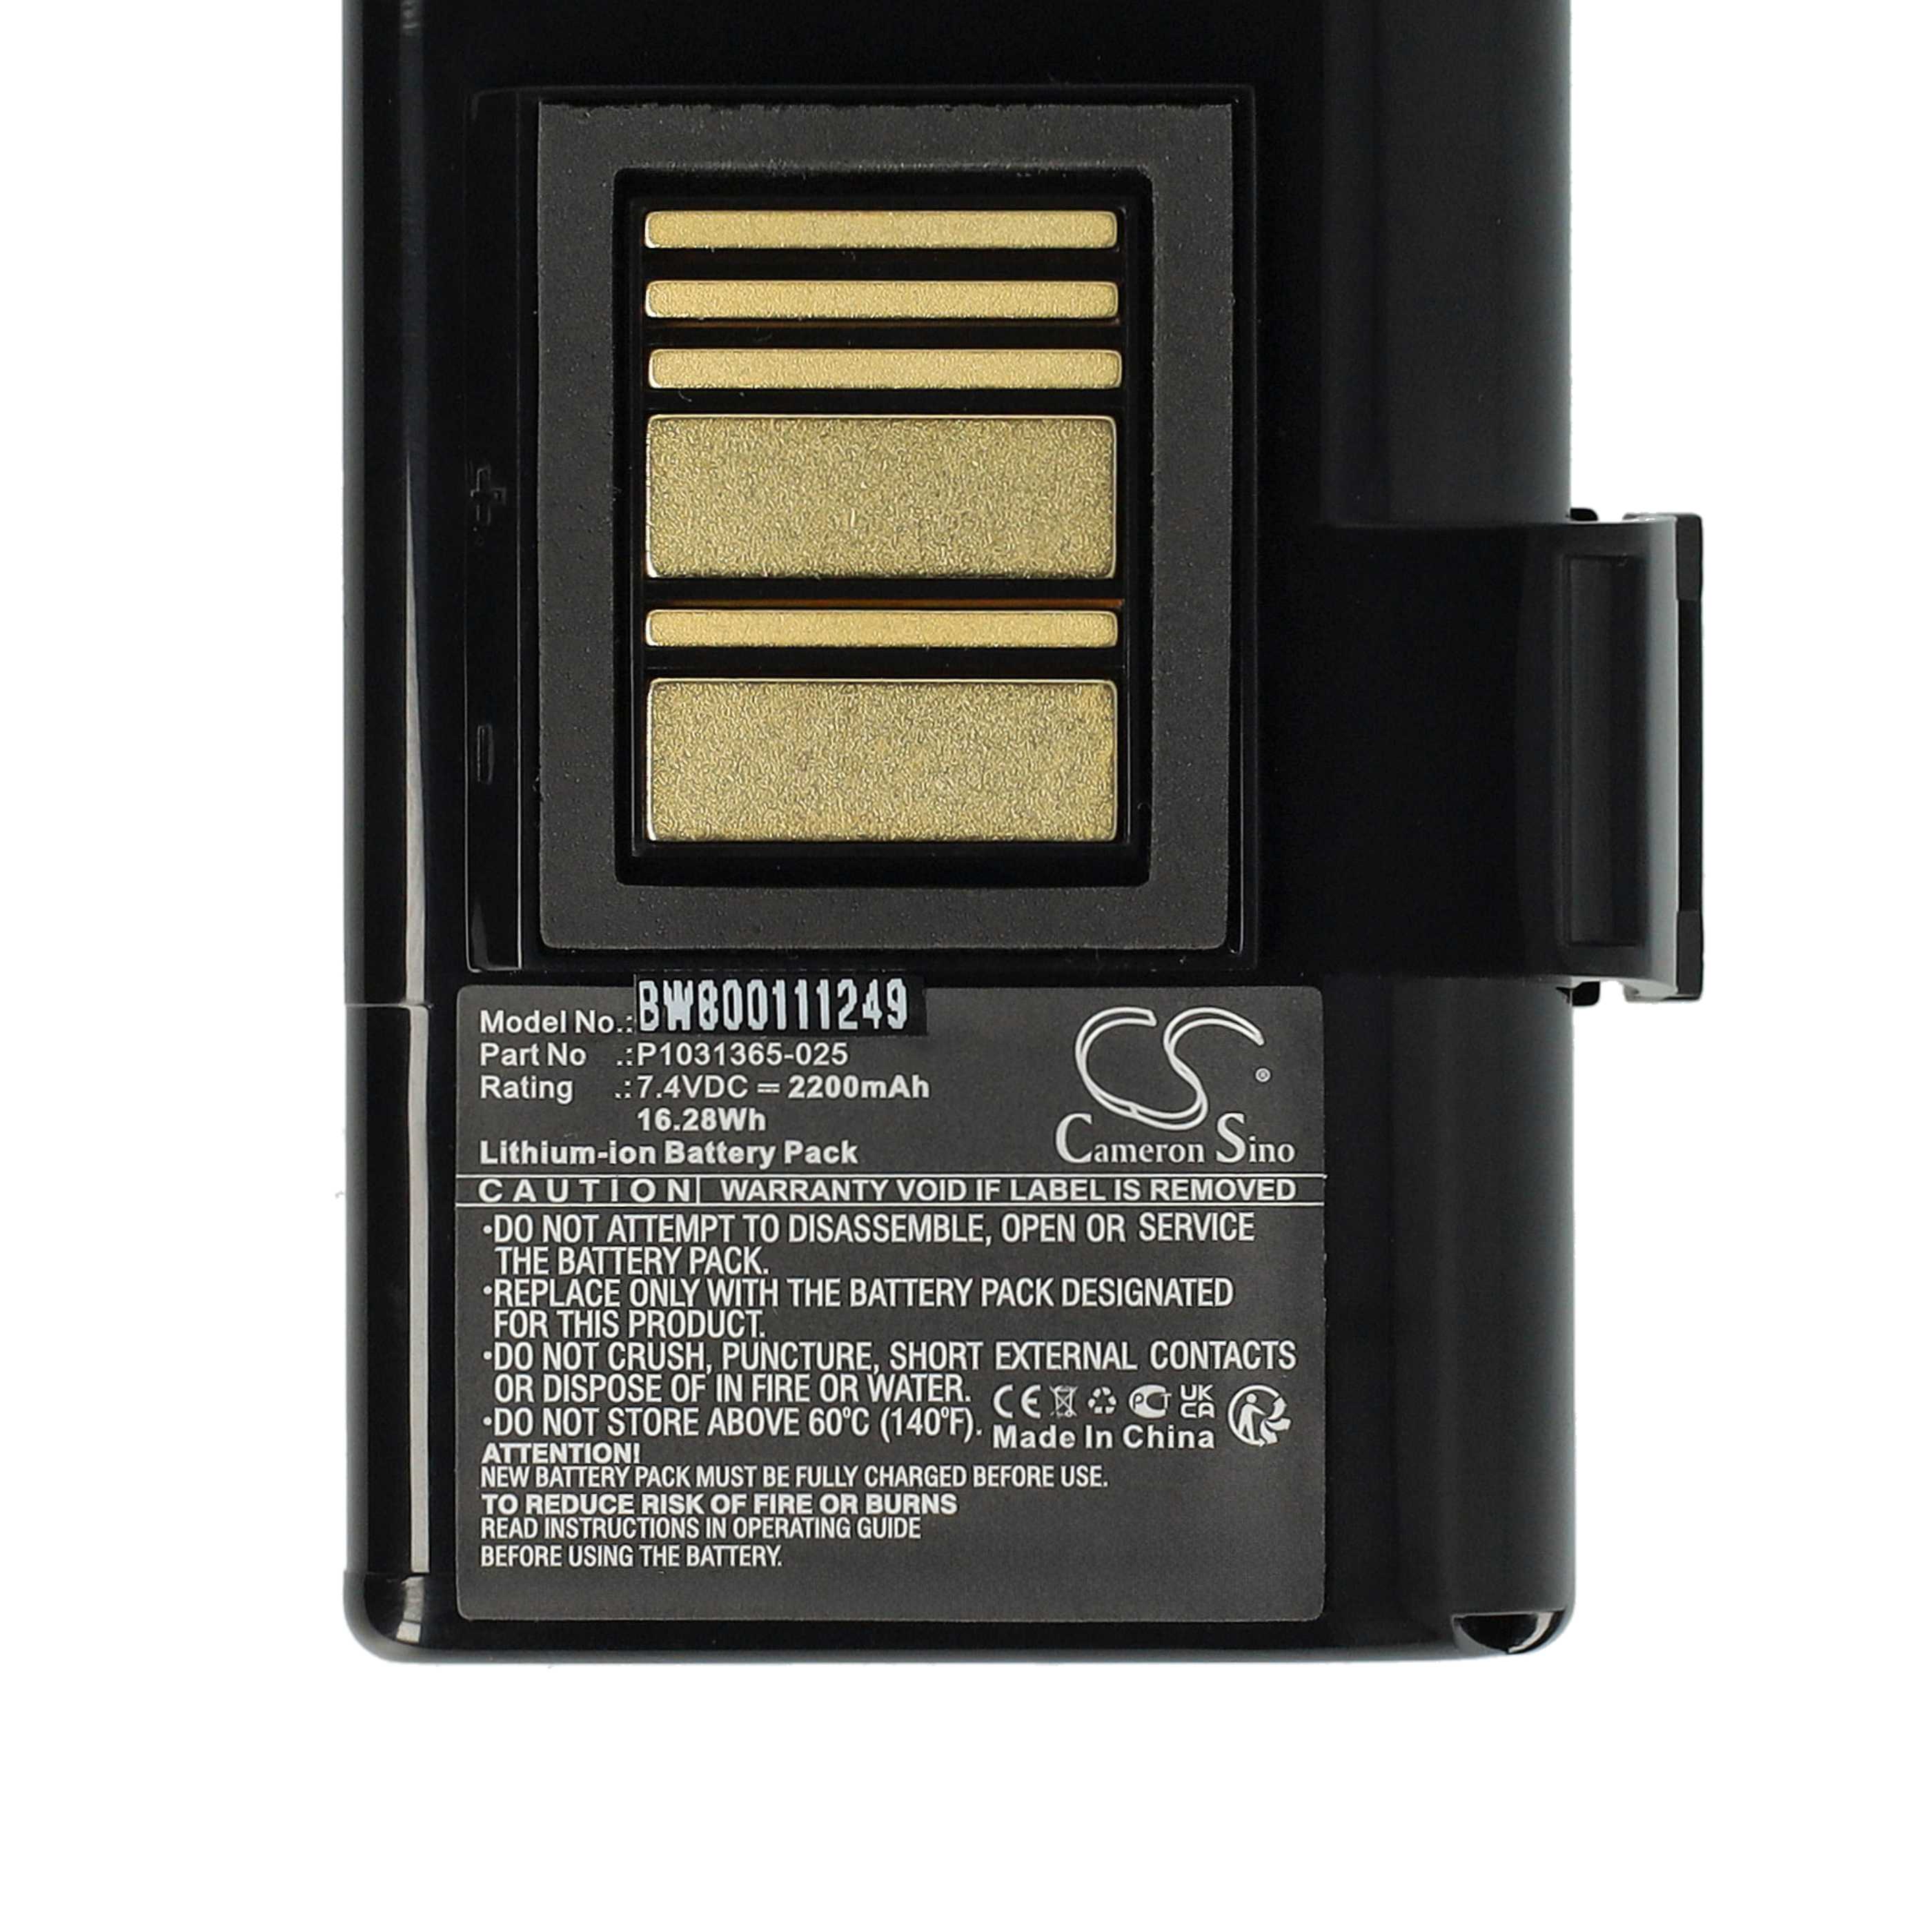 Batteria per stampante sostituisce Zebra AT16004, BTRY-MPP-34MA1-01 Zebra - 2200mAh 7,4V Li-Ion